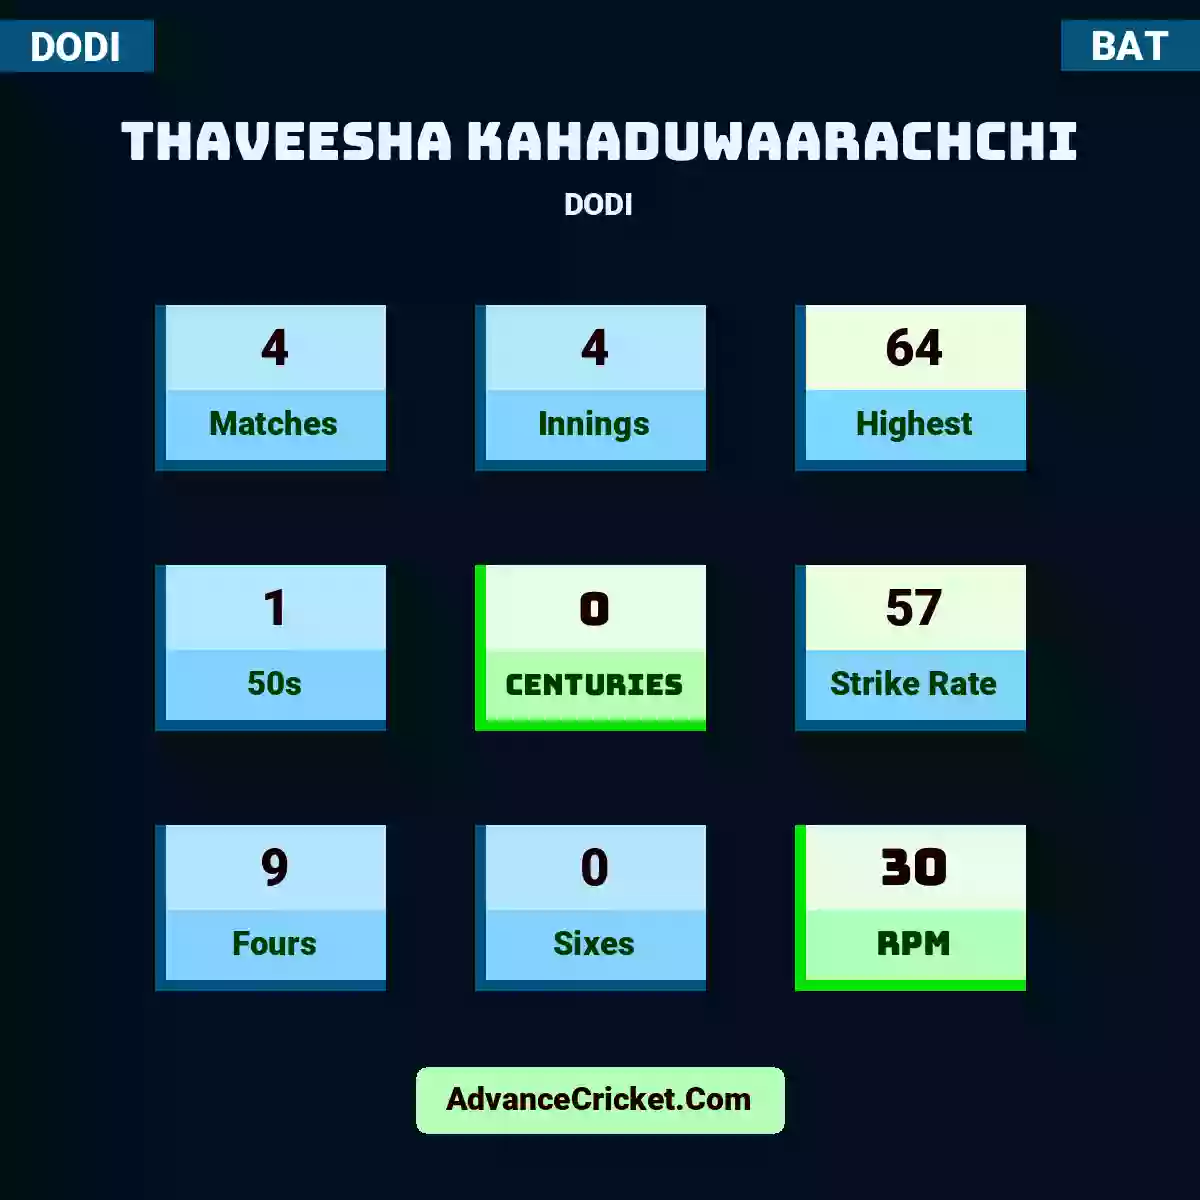 Thaveesha Kahaduwaarachchi DODI , Thaveesha Kahaduwaarachchi played 4 matches, scored 64 runs as highest, 1 half-centuries, and 0 centuries, with a strike rate of 57. T.Kahaduwaarachchi hit 9 fours and 0 sixes, with an RPM of 30.